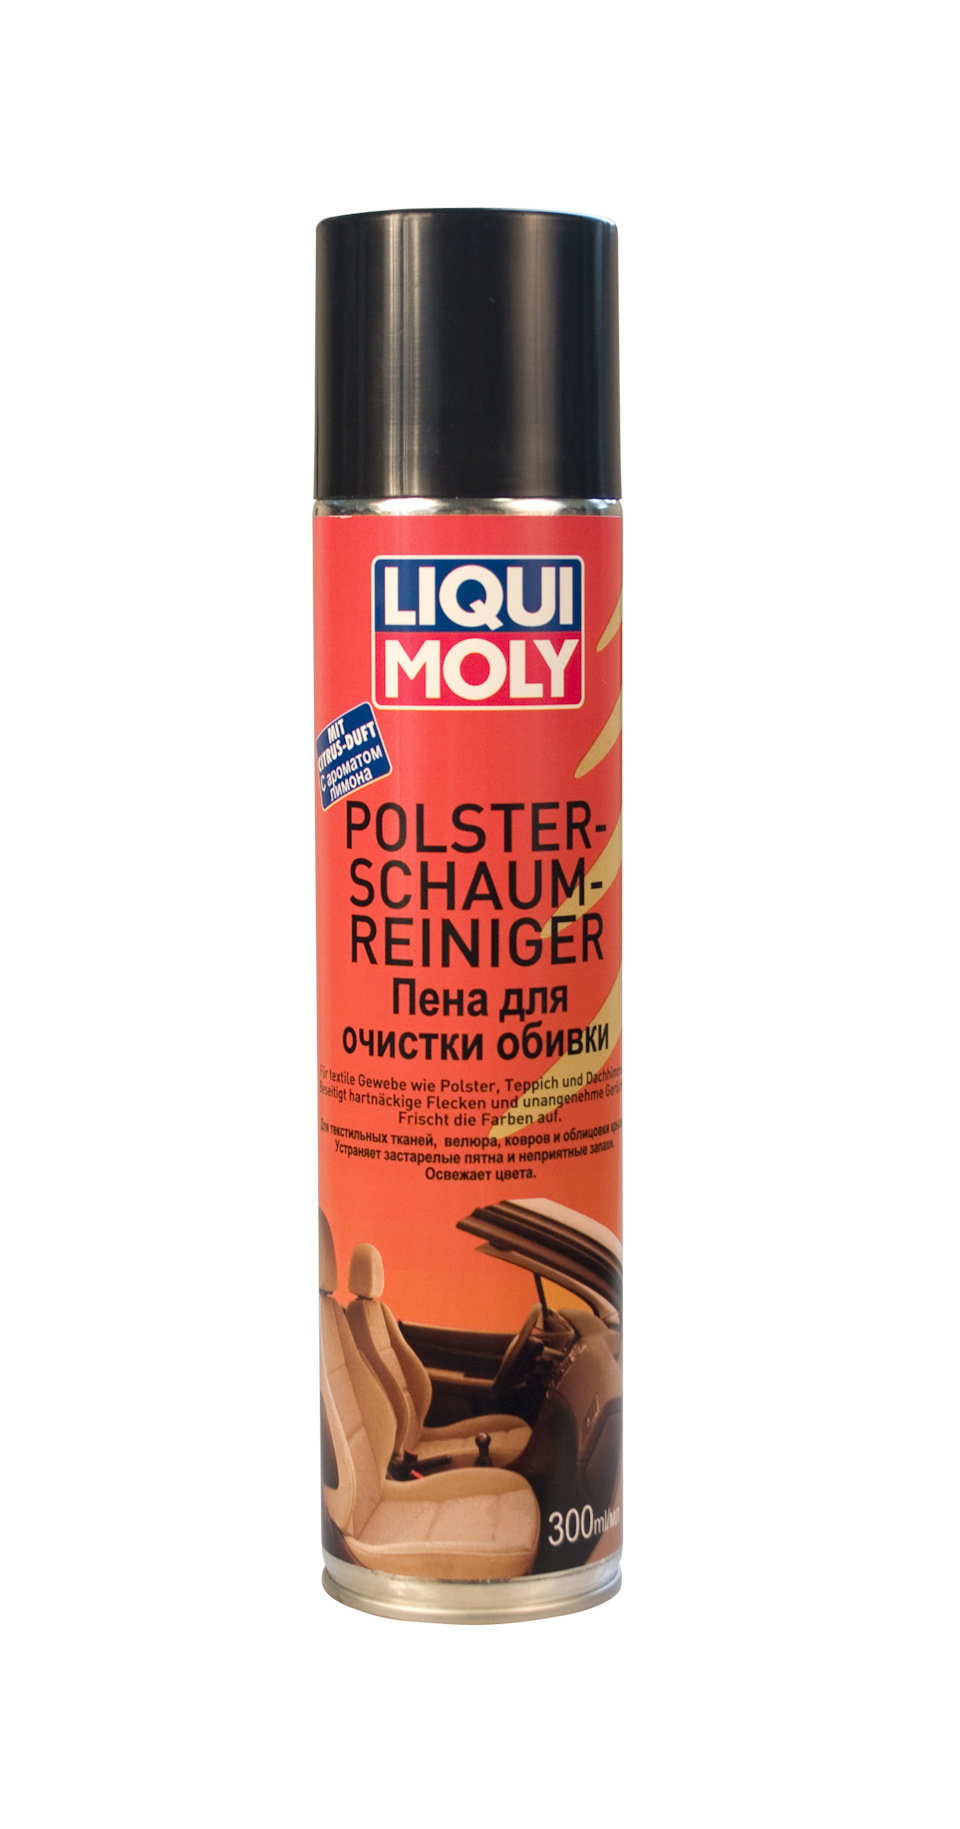 LIQUI MOLY polster-schaum-reiniger 0.3l_пена для очистки обивки LIQUI MOLY арт. 7586